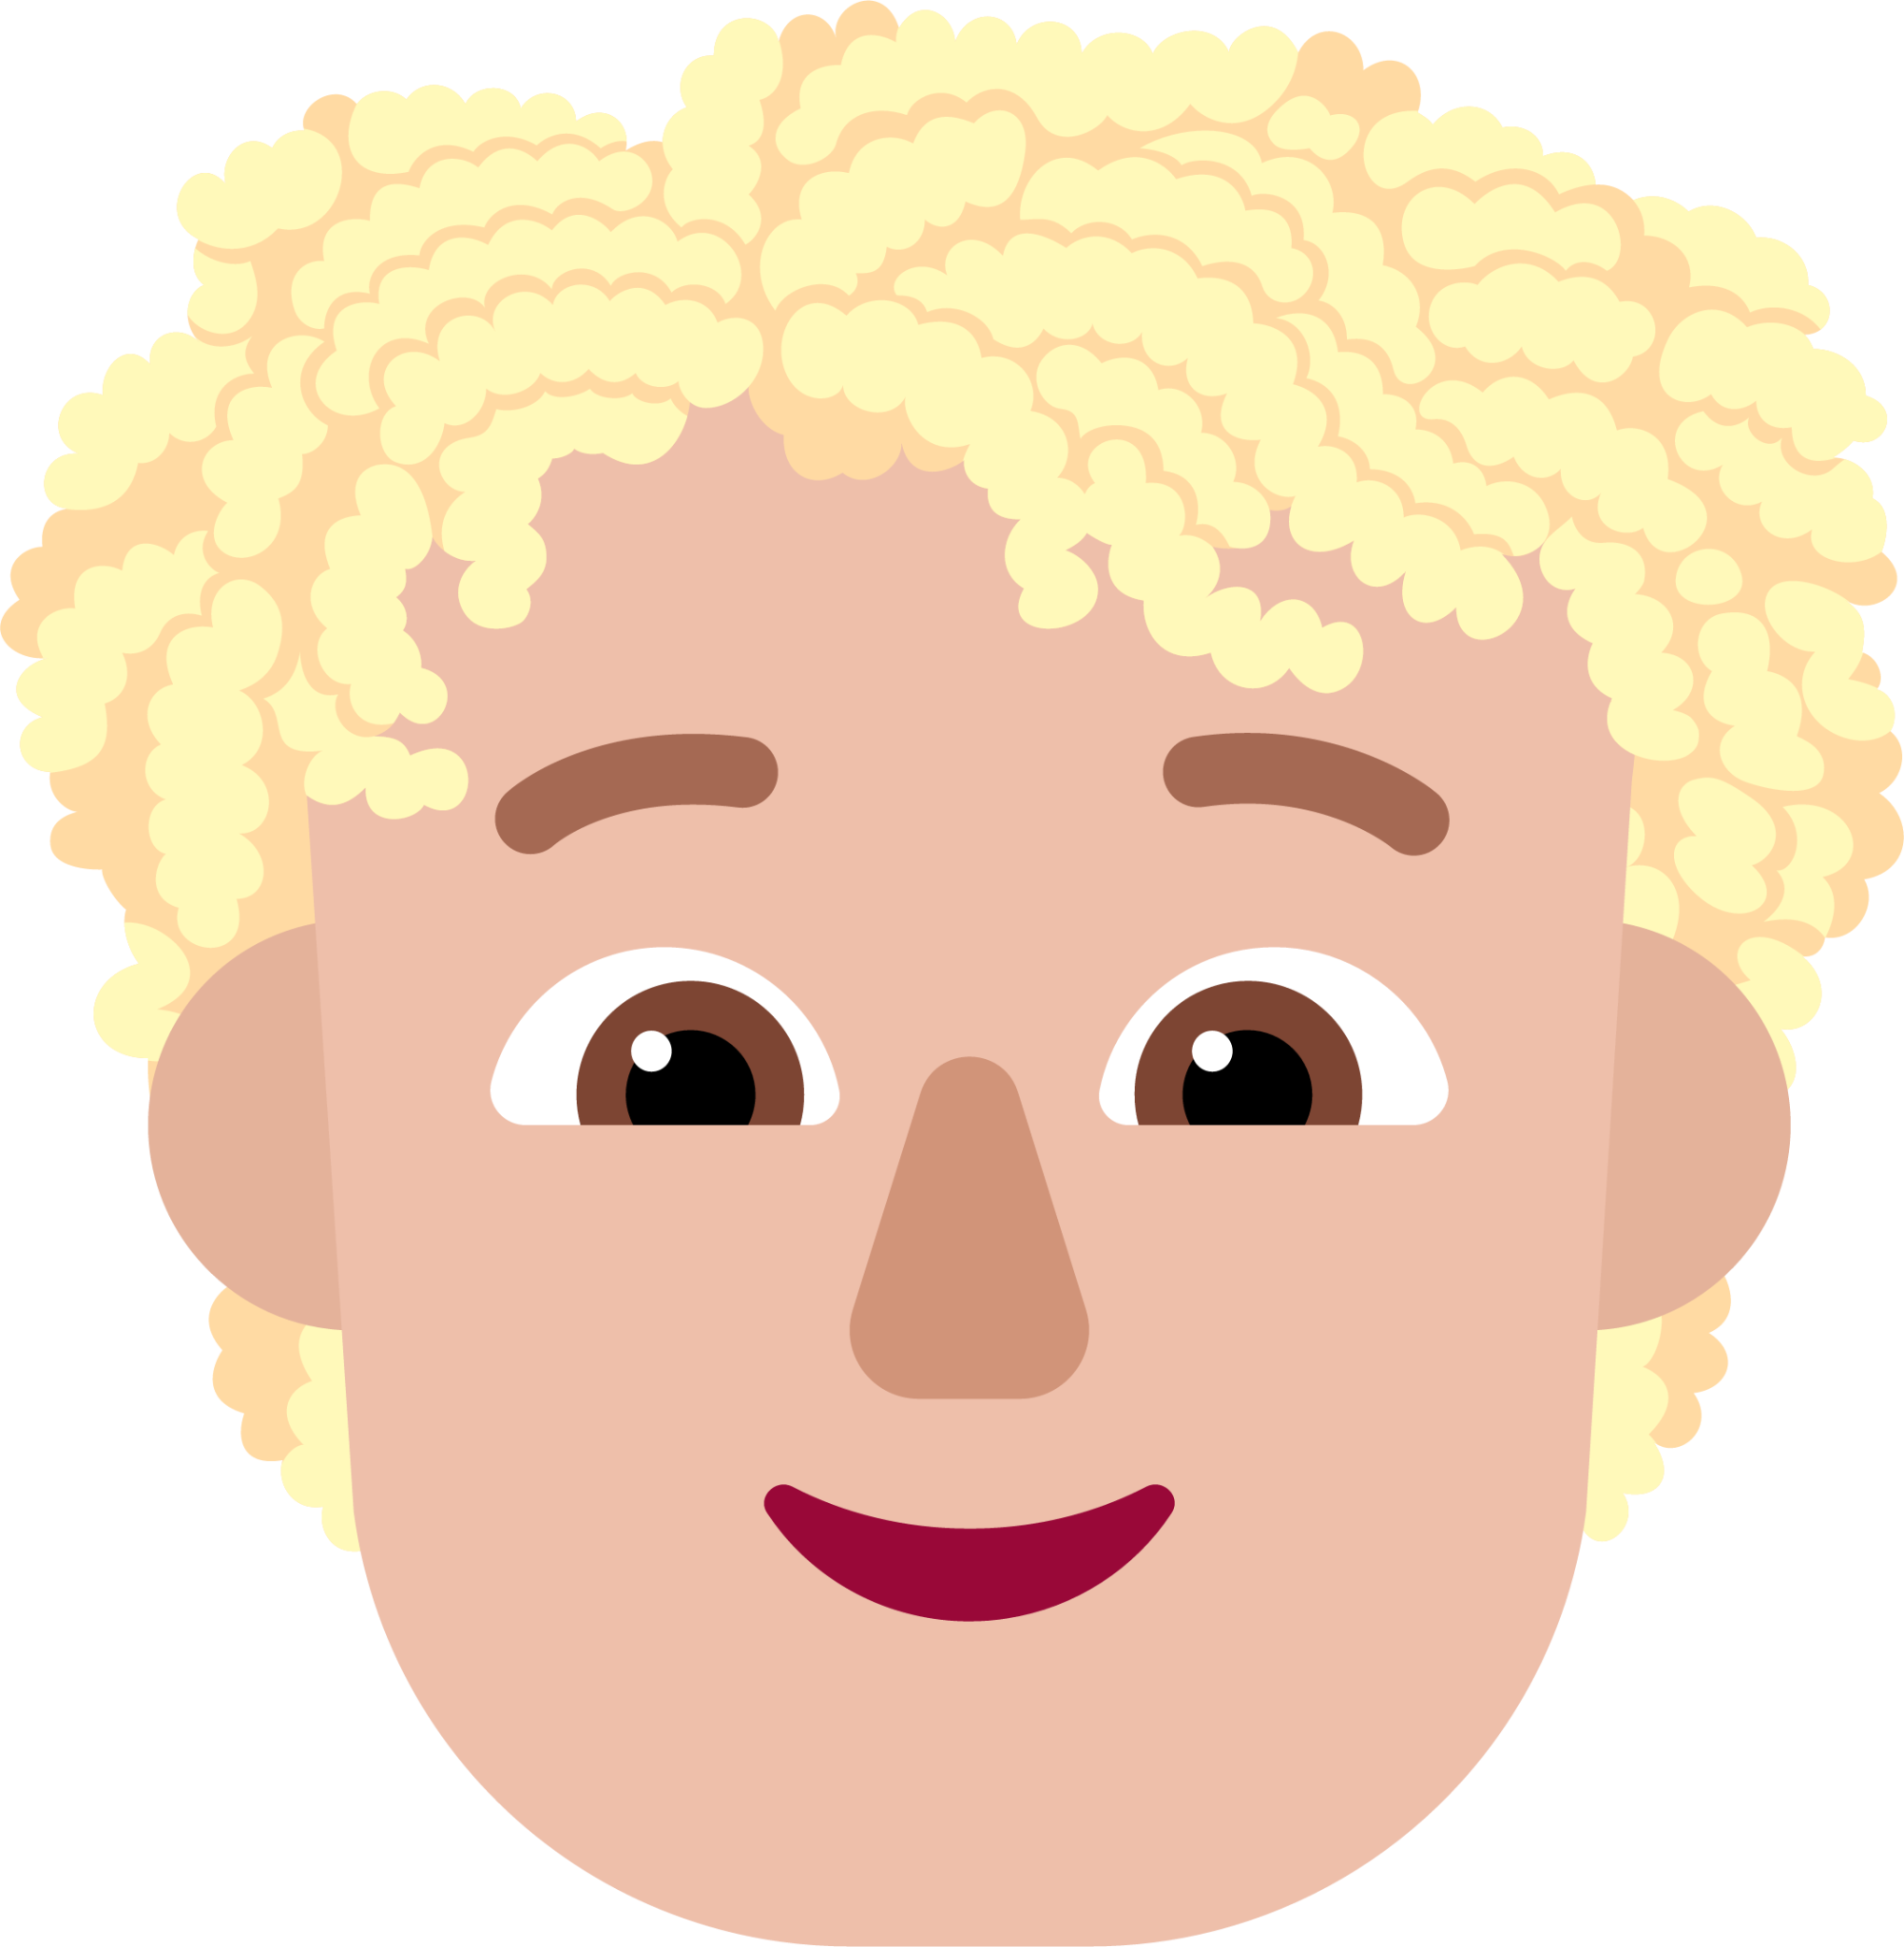 person curly hair medium light emoji